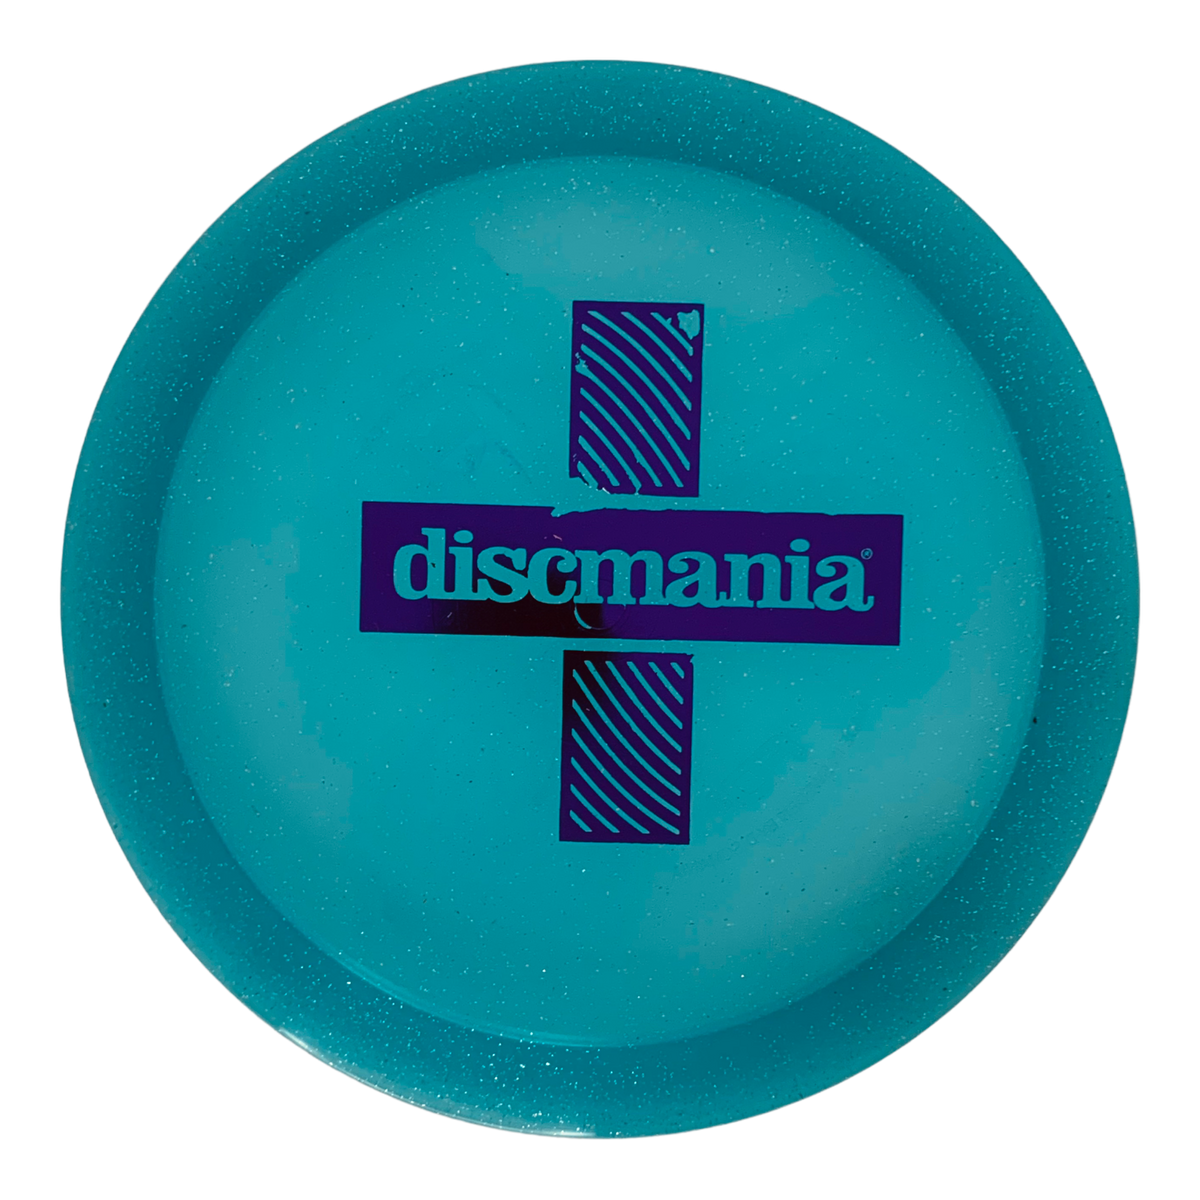 Discmania Rarities and Collectibles